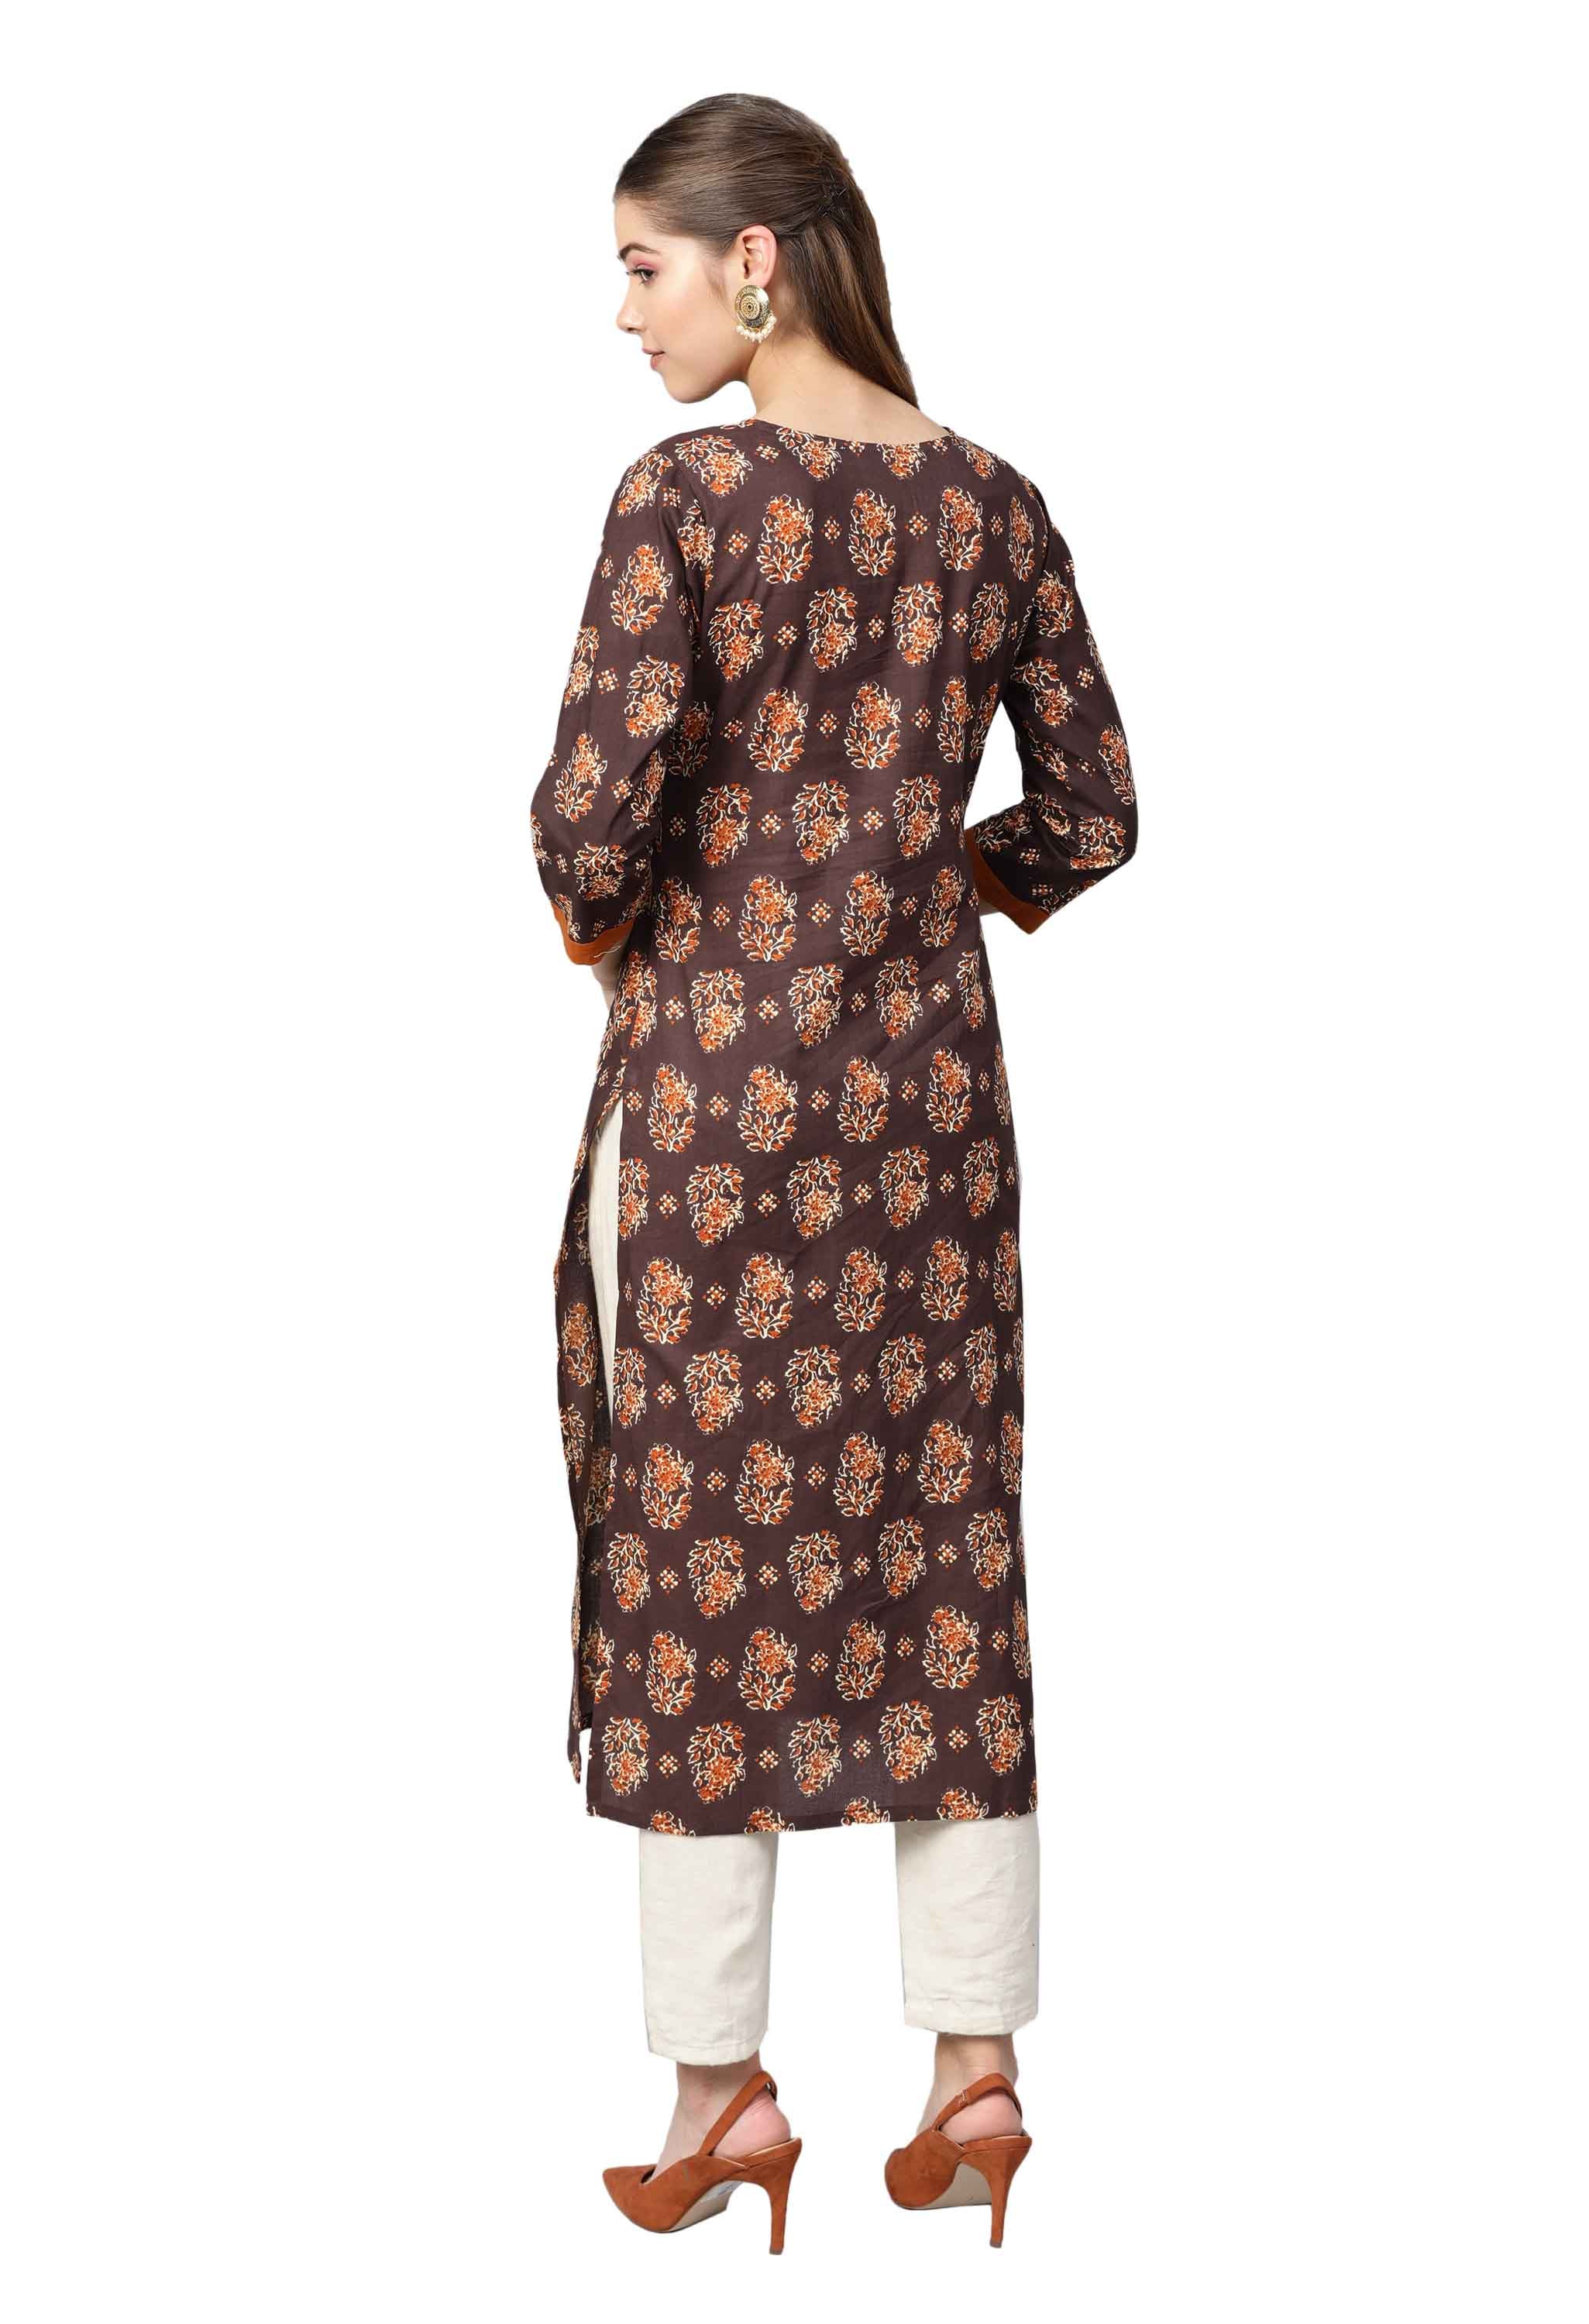 Women's Bwown Cotton Printed 3/4 Sleeve Round Neck Casual Kurta Only - Myshka